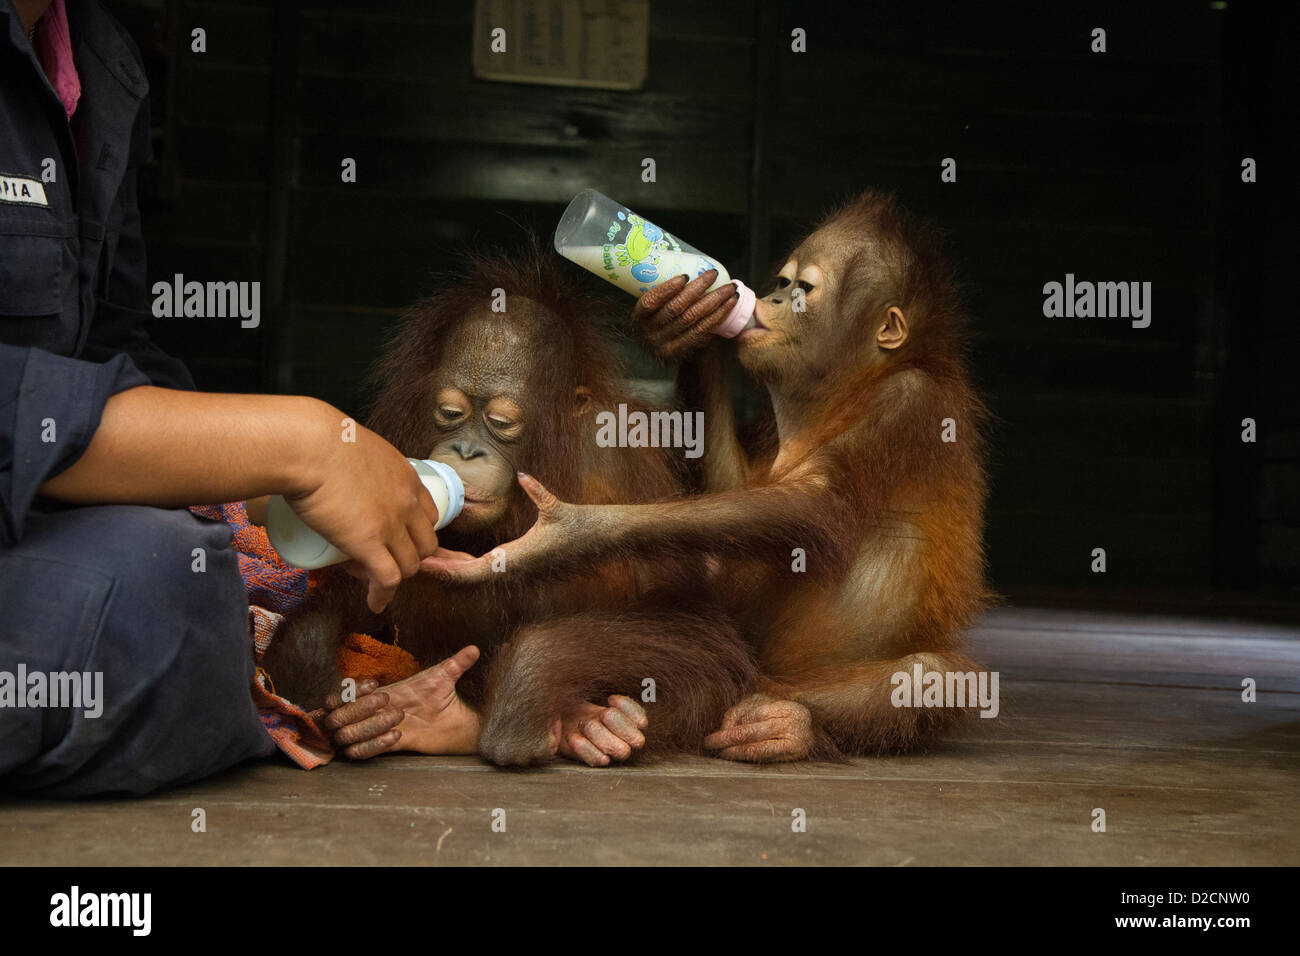 Orangutan (Pongo pygmaeus) caretaker bottle-feeding two infants, Orangutan Care Center, Borneo, Indonesia Stock Photo